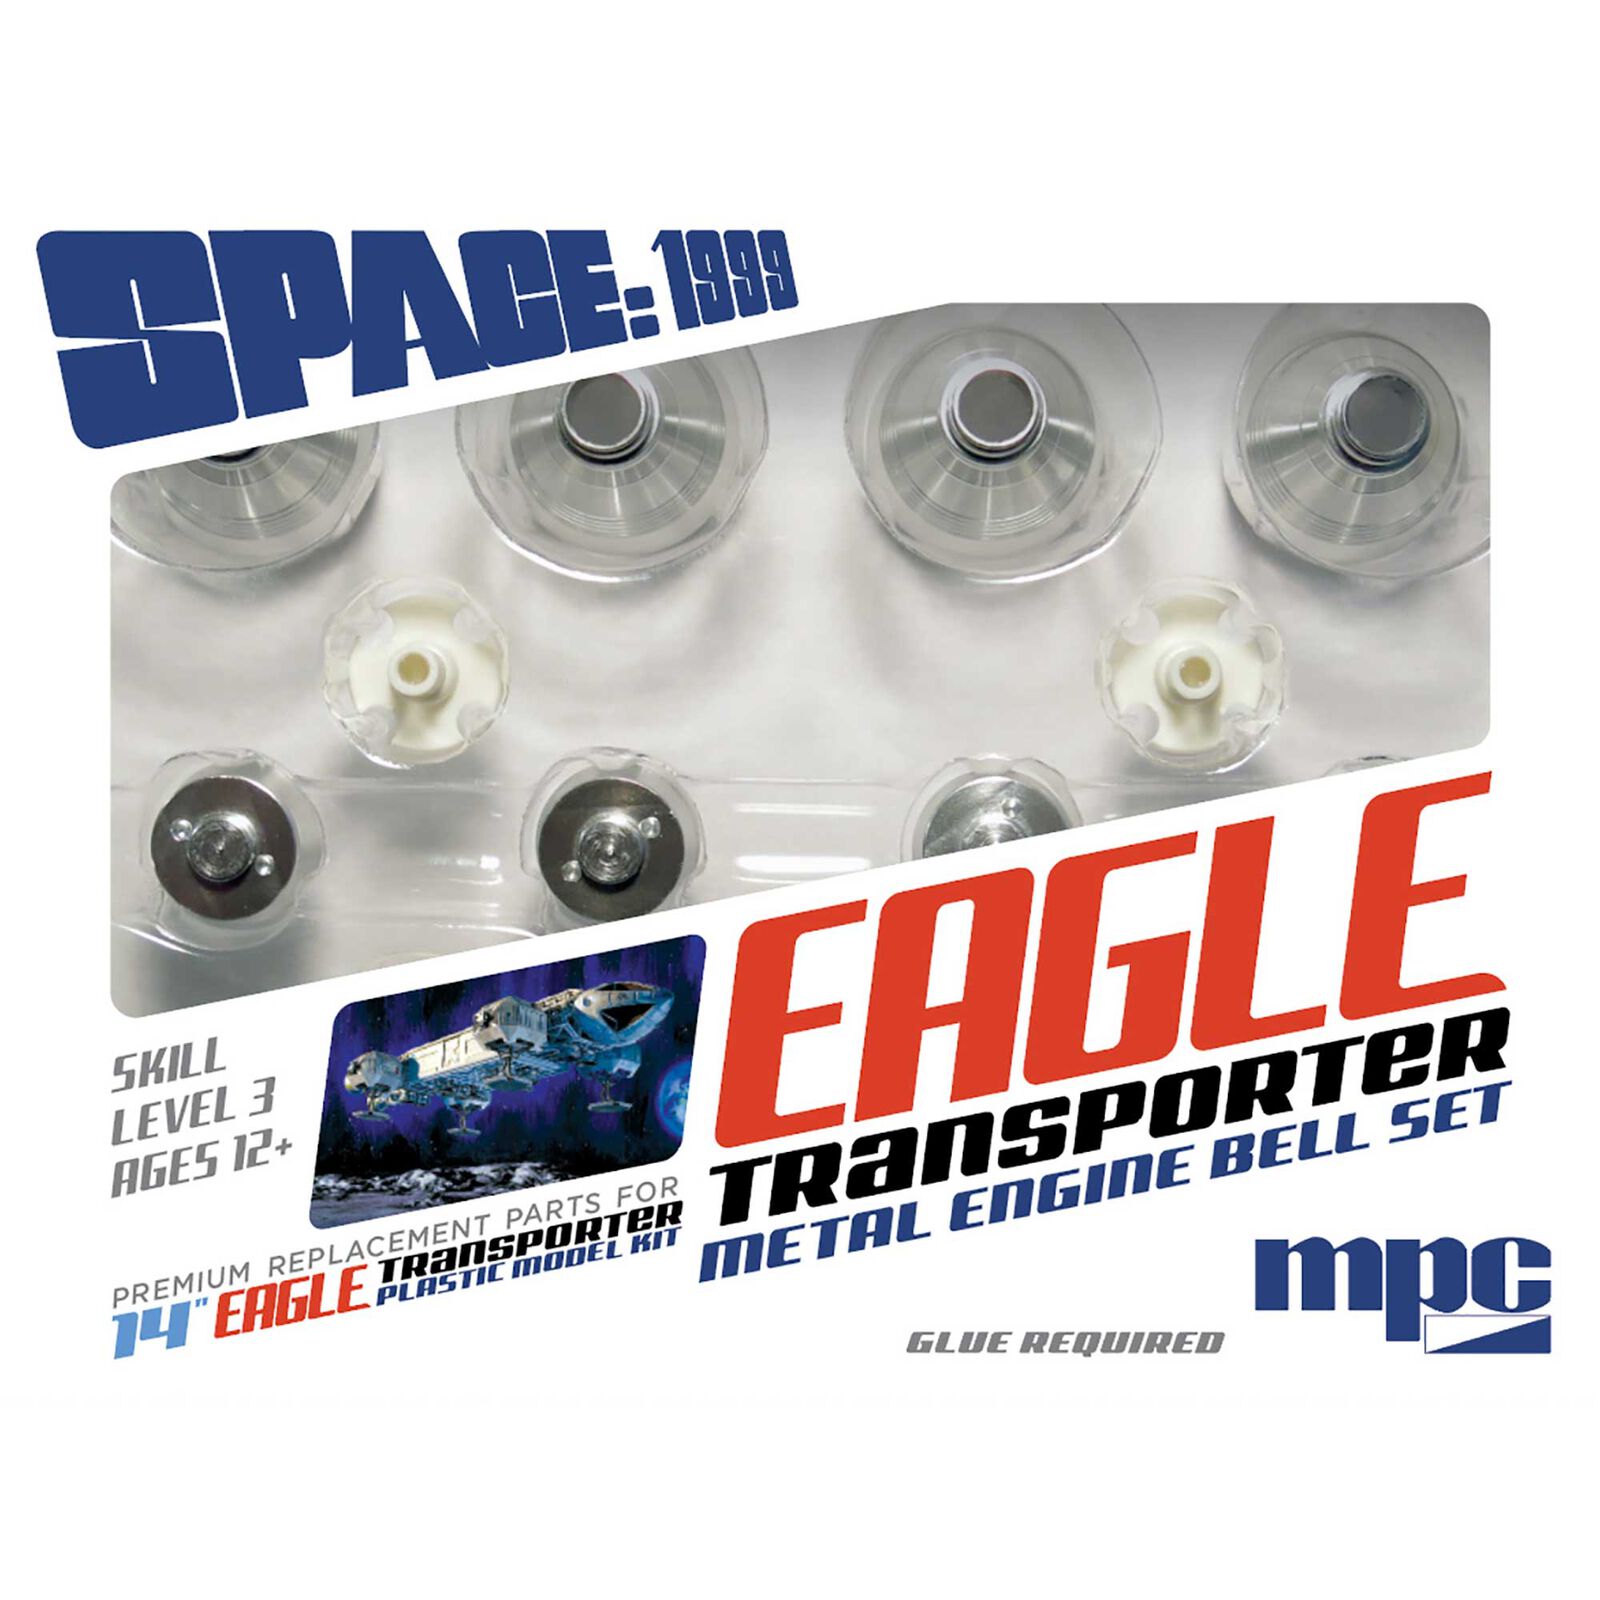 1/72 Space1999 Eagle Metal Engine Bell Set